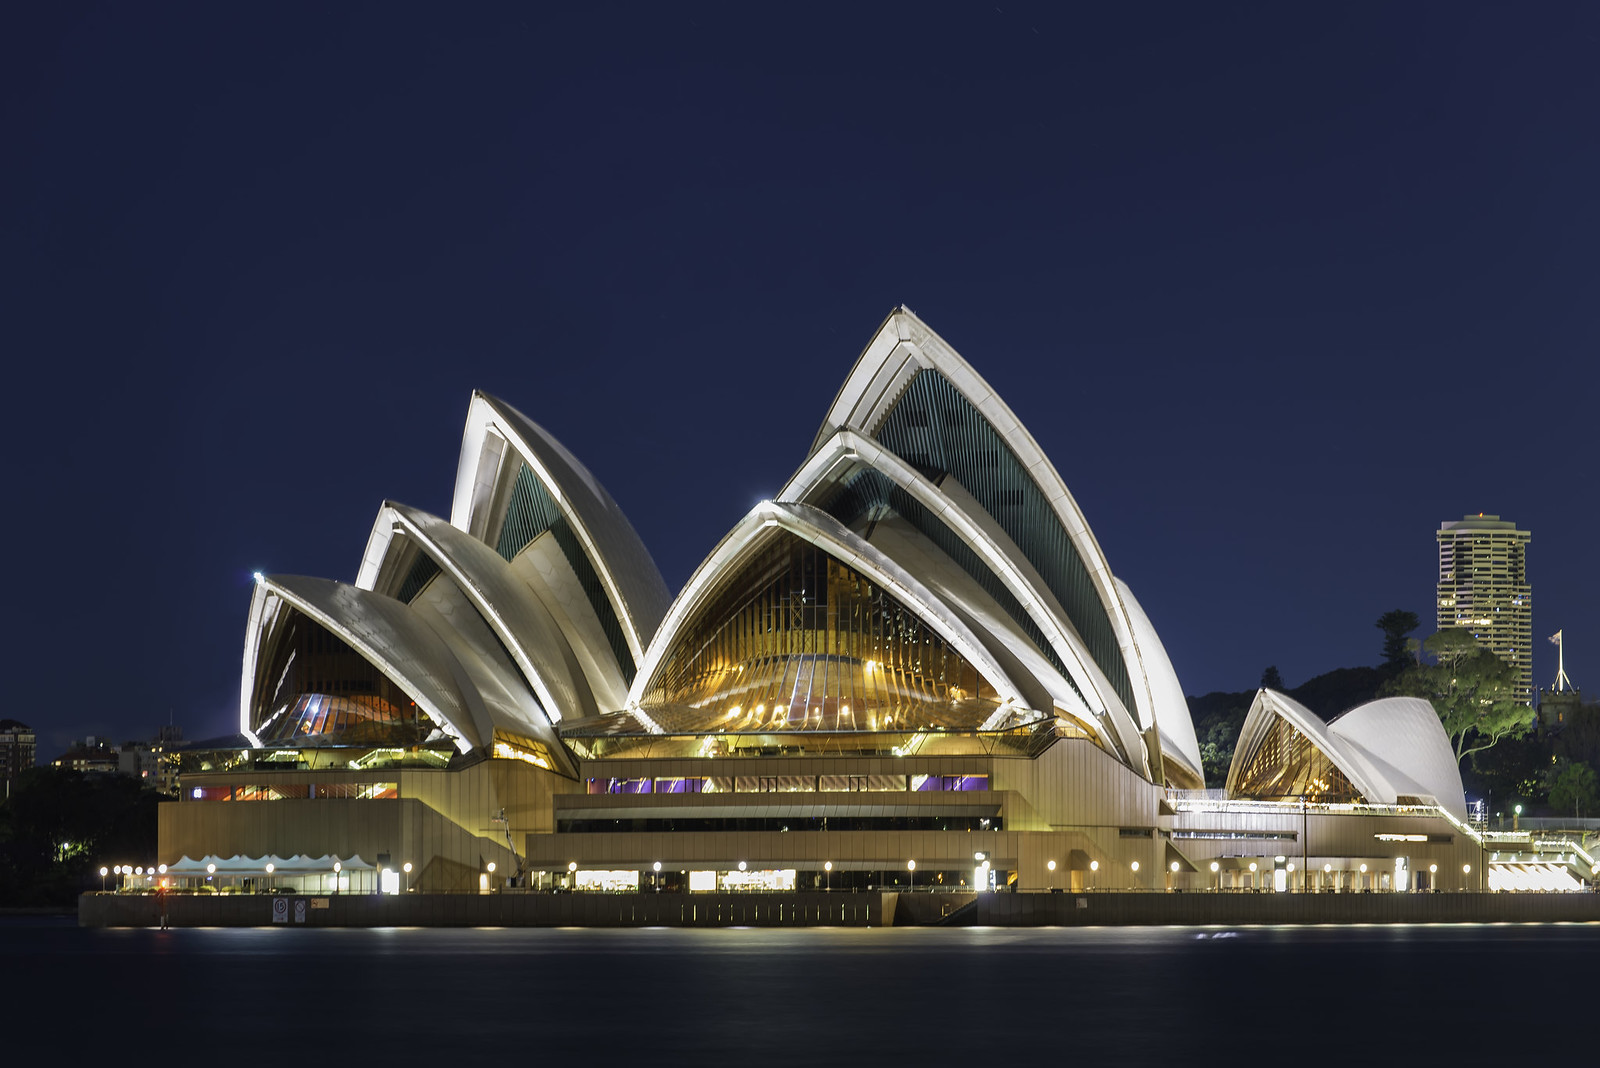 Sydney Opera House illuminated at night